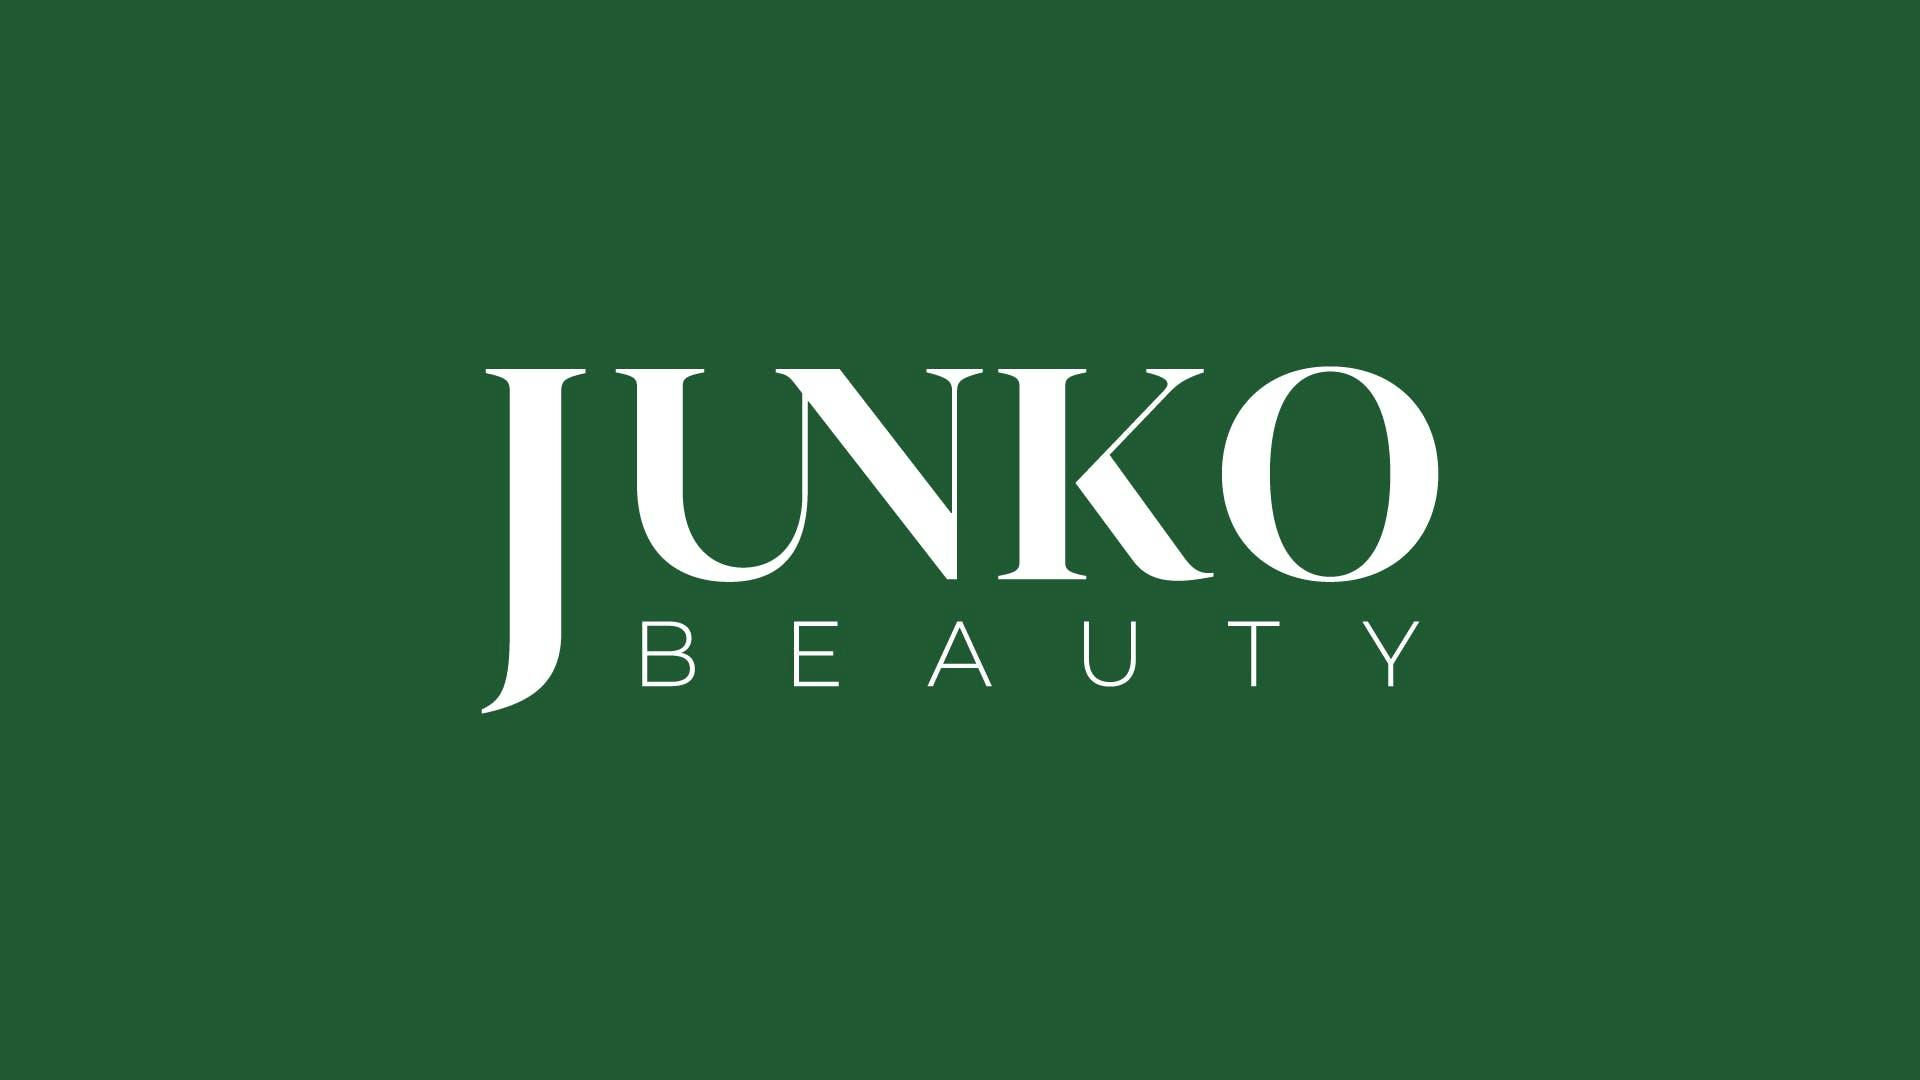 Junko Beauty - Design de logo de clínicas de estética